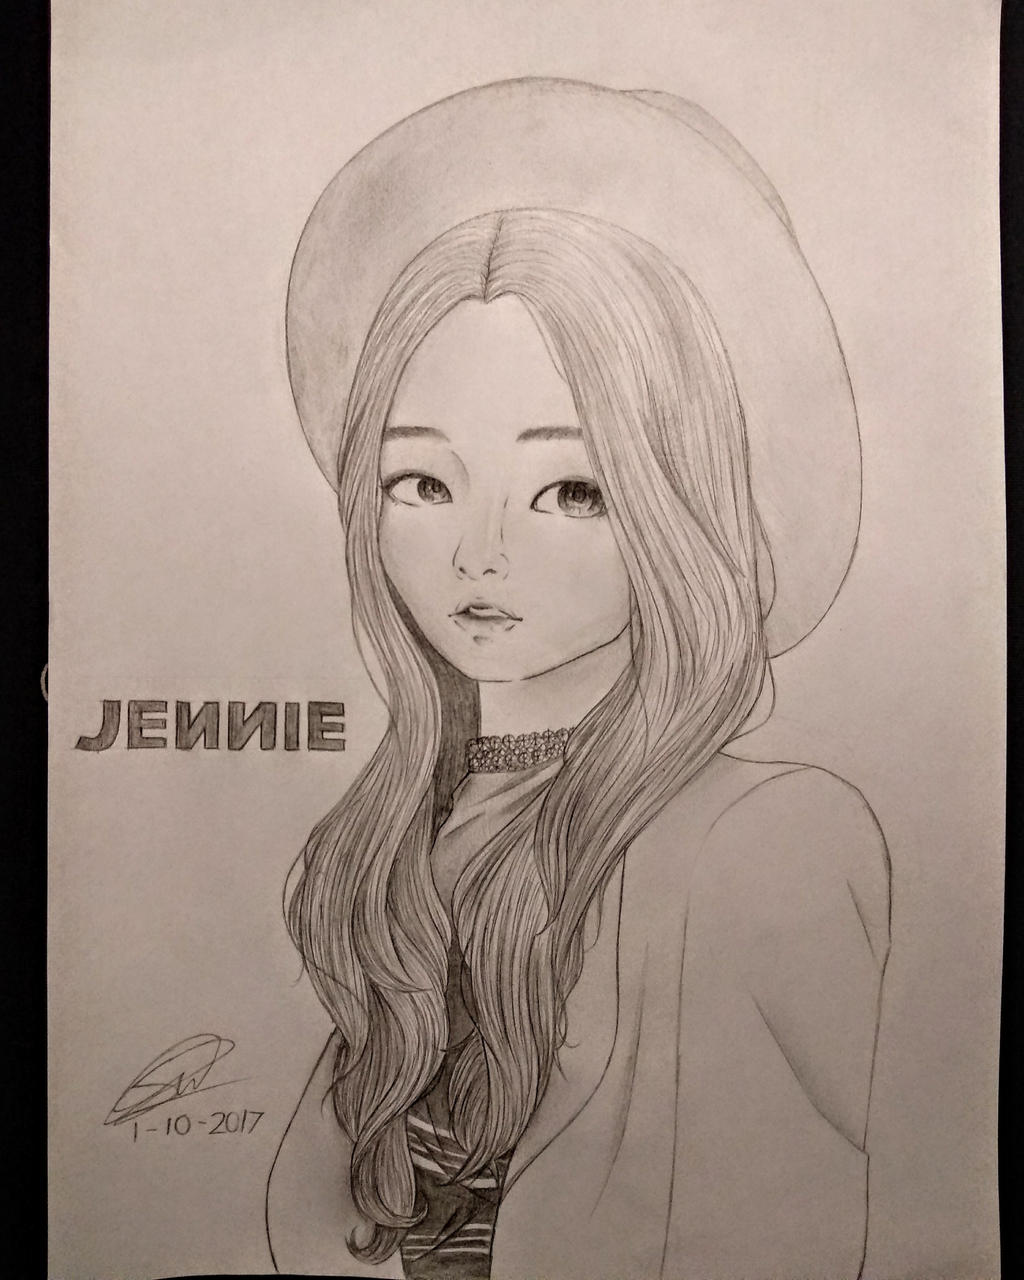 BLACKPINK: Jennie Drawing by Sinny2000 on DeviantArt